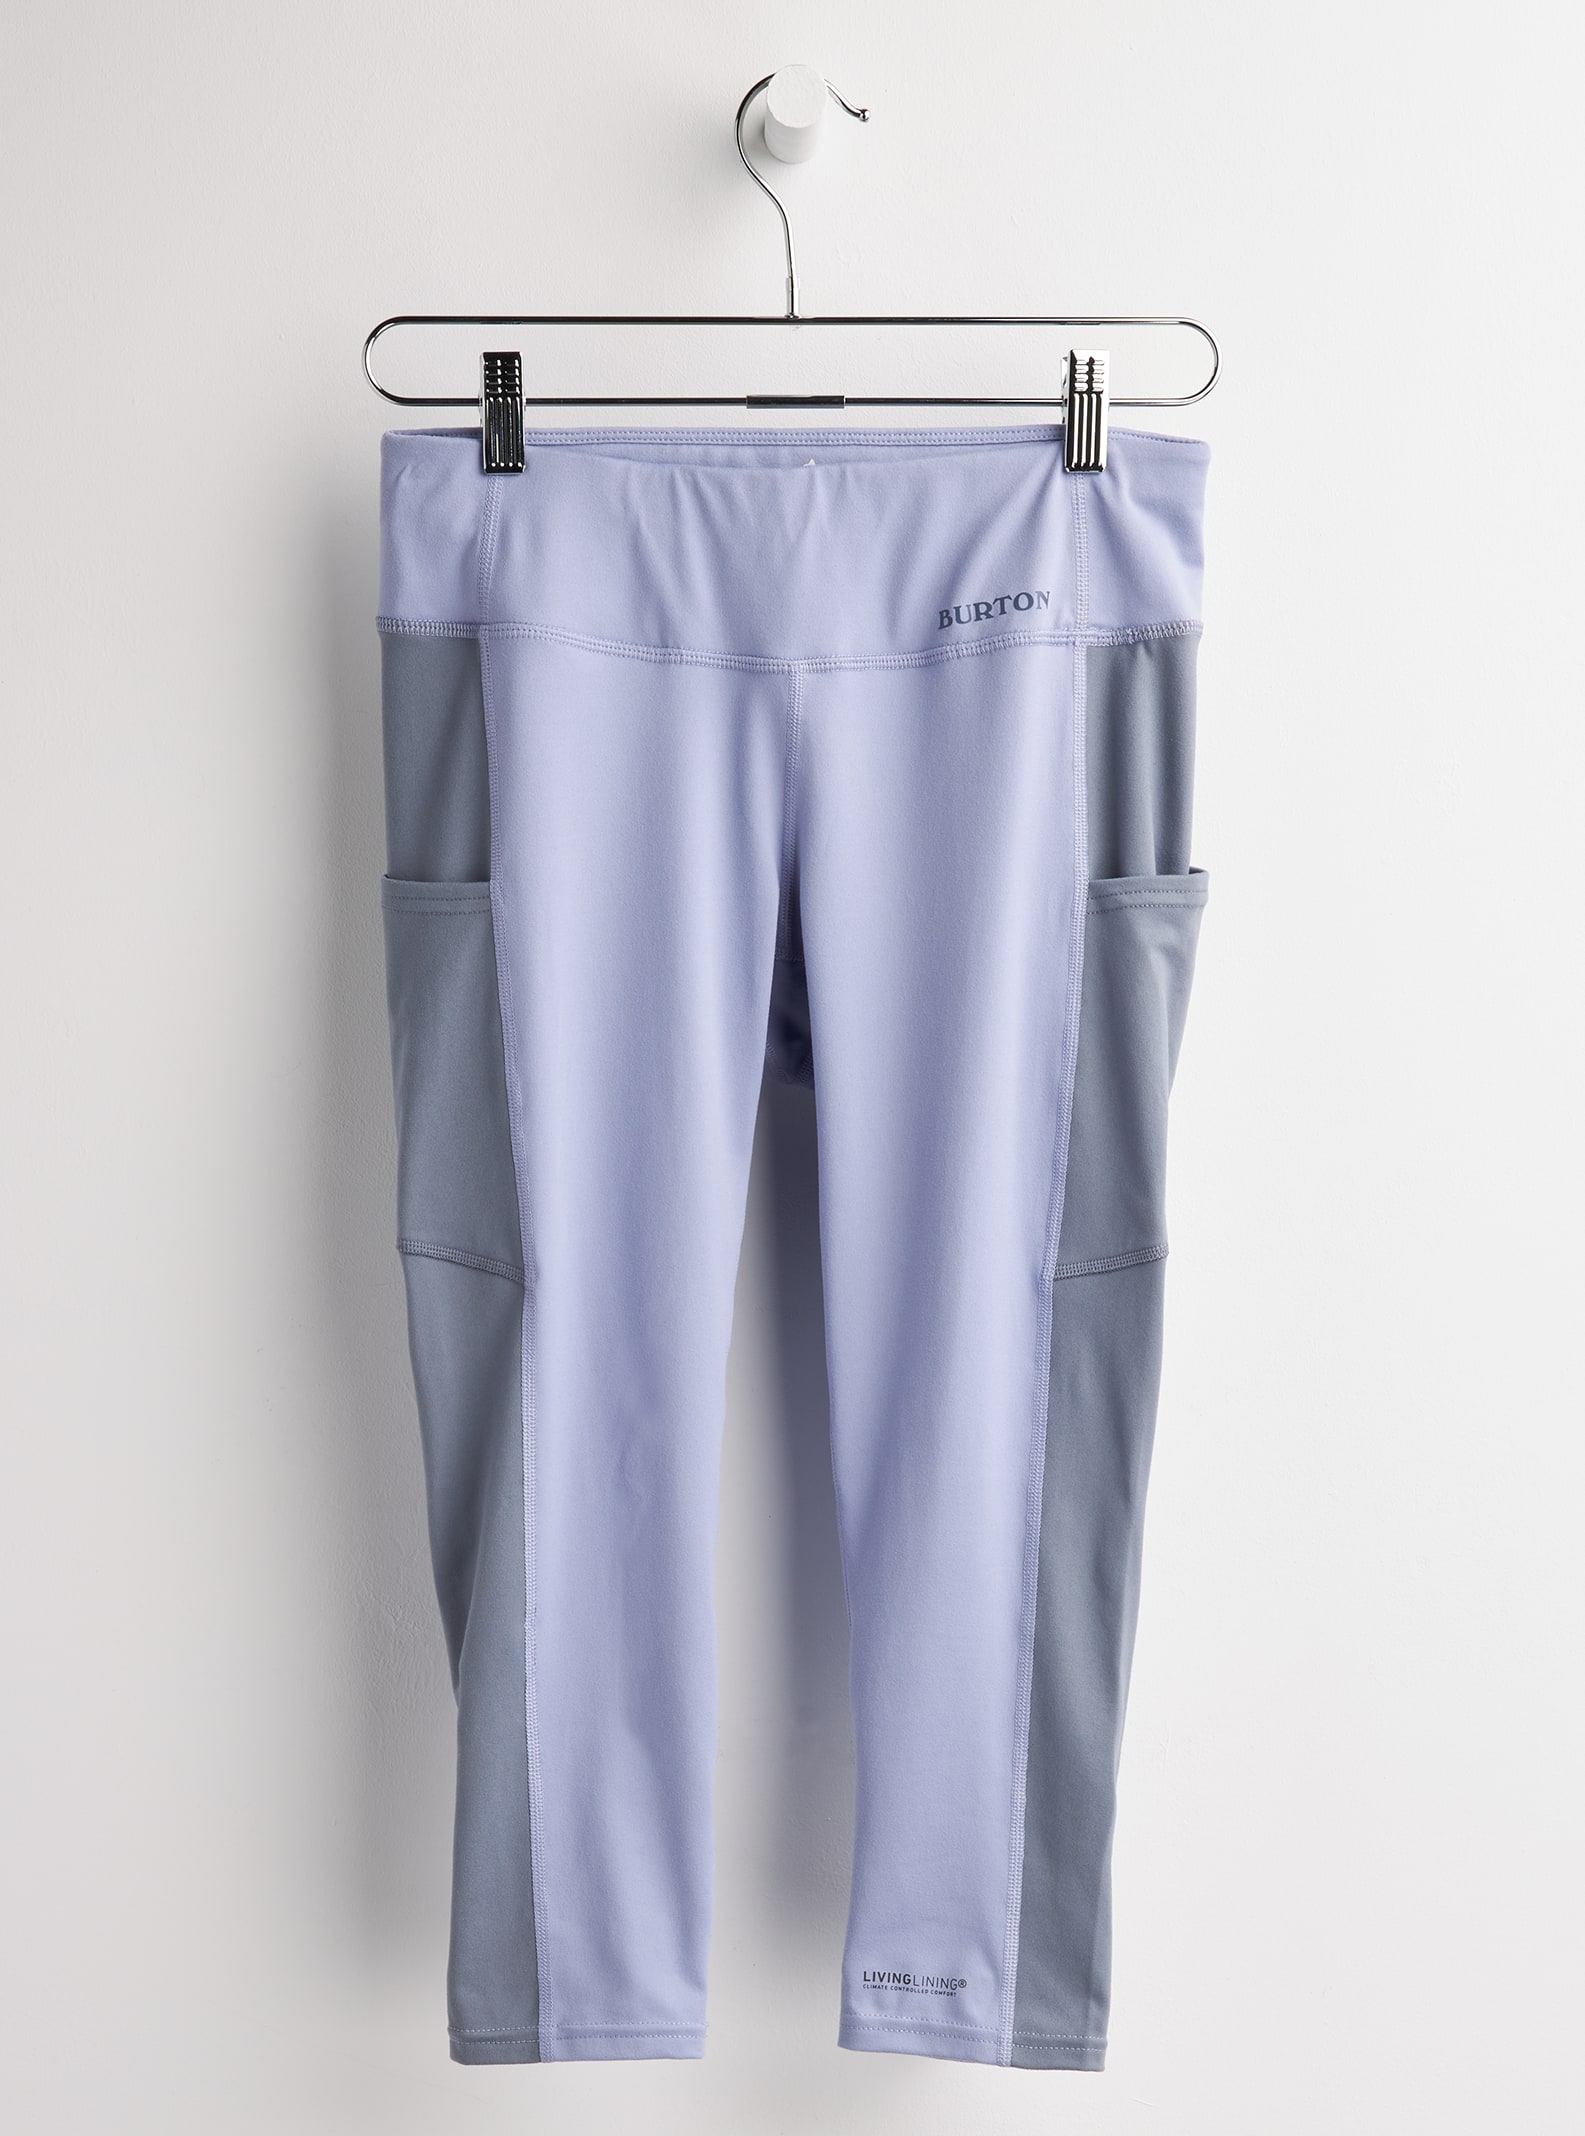 Burton - Pantalon 3/4 sous-vêtement Midweight X femme, XS